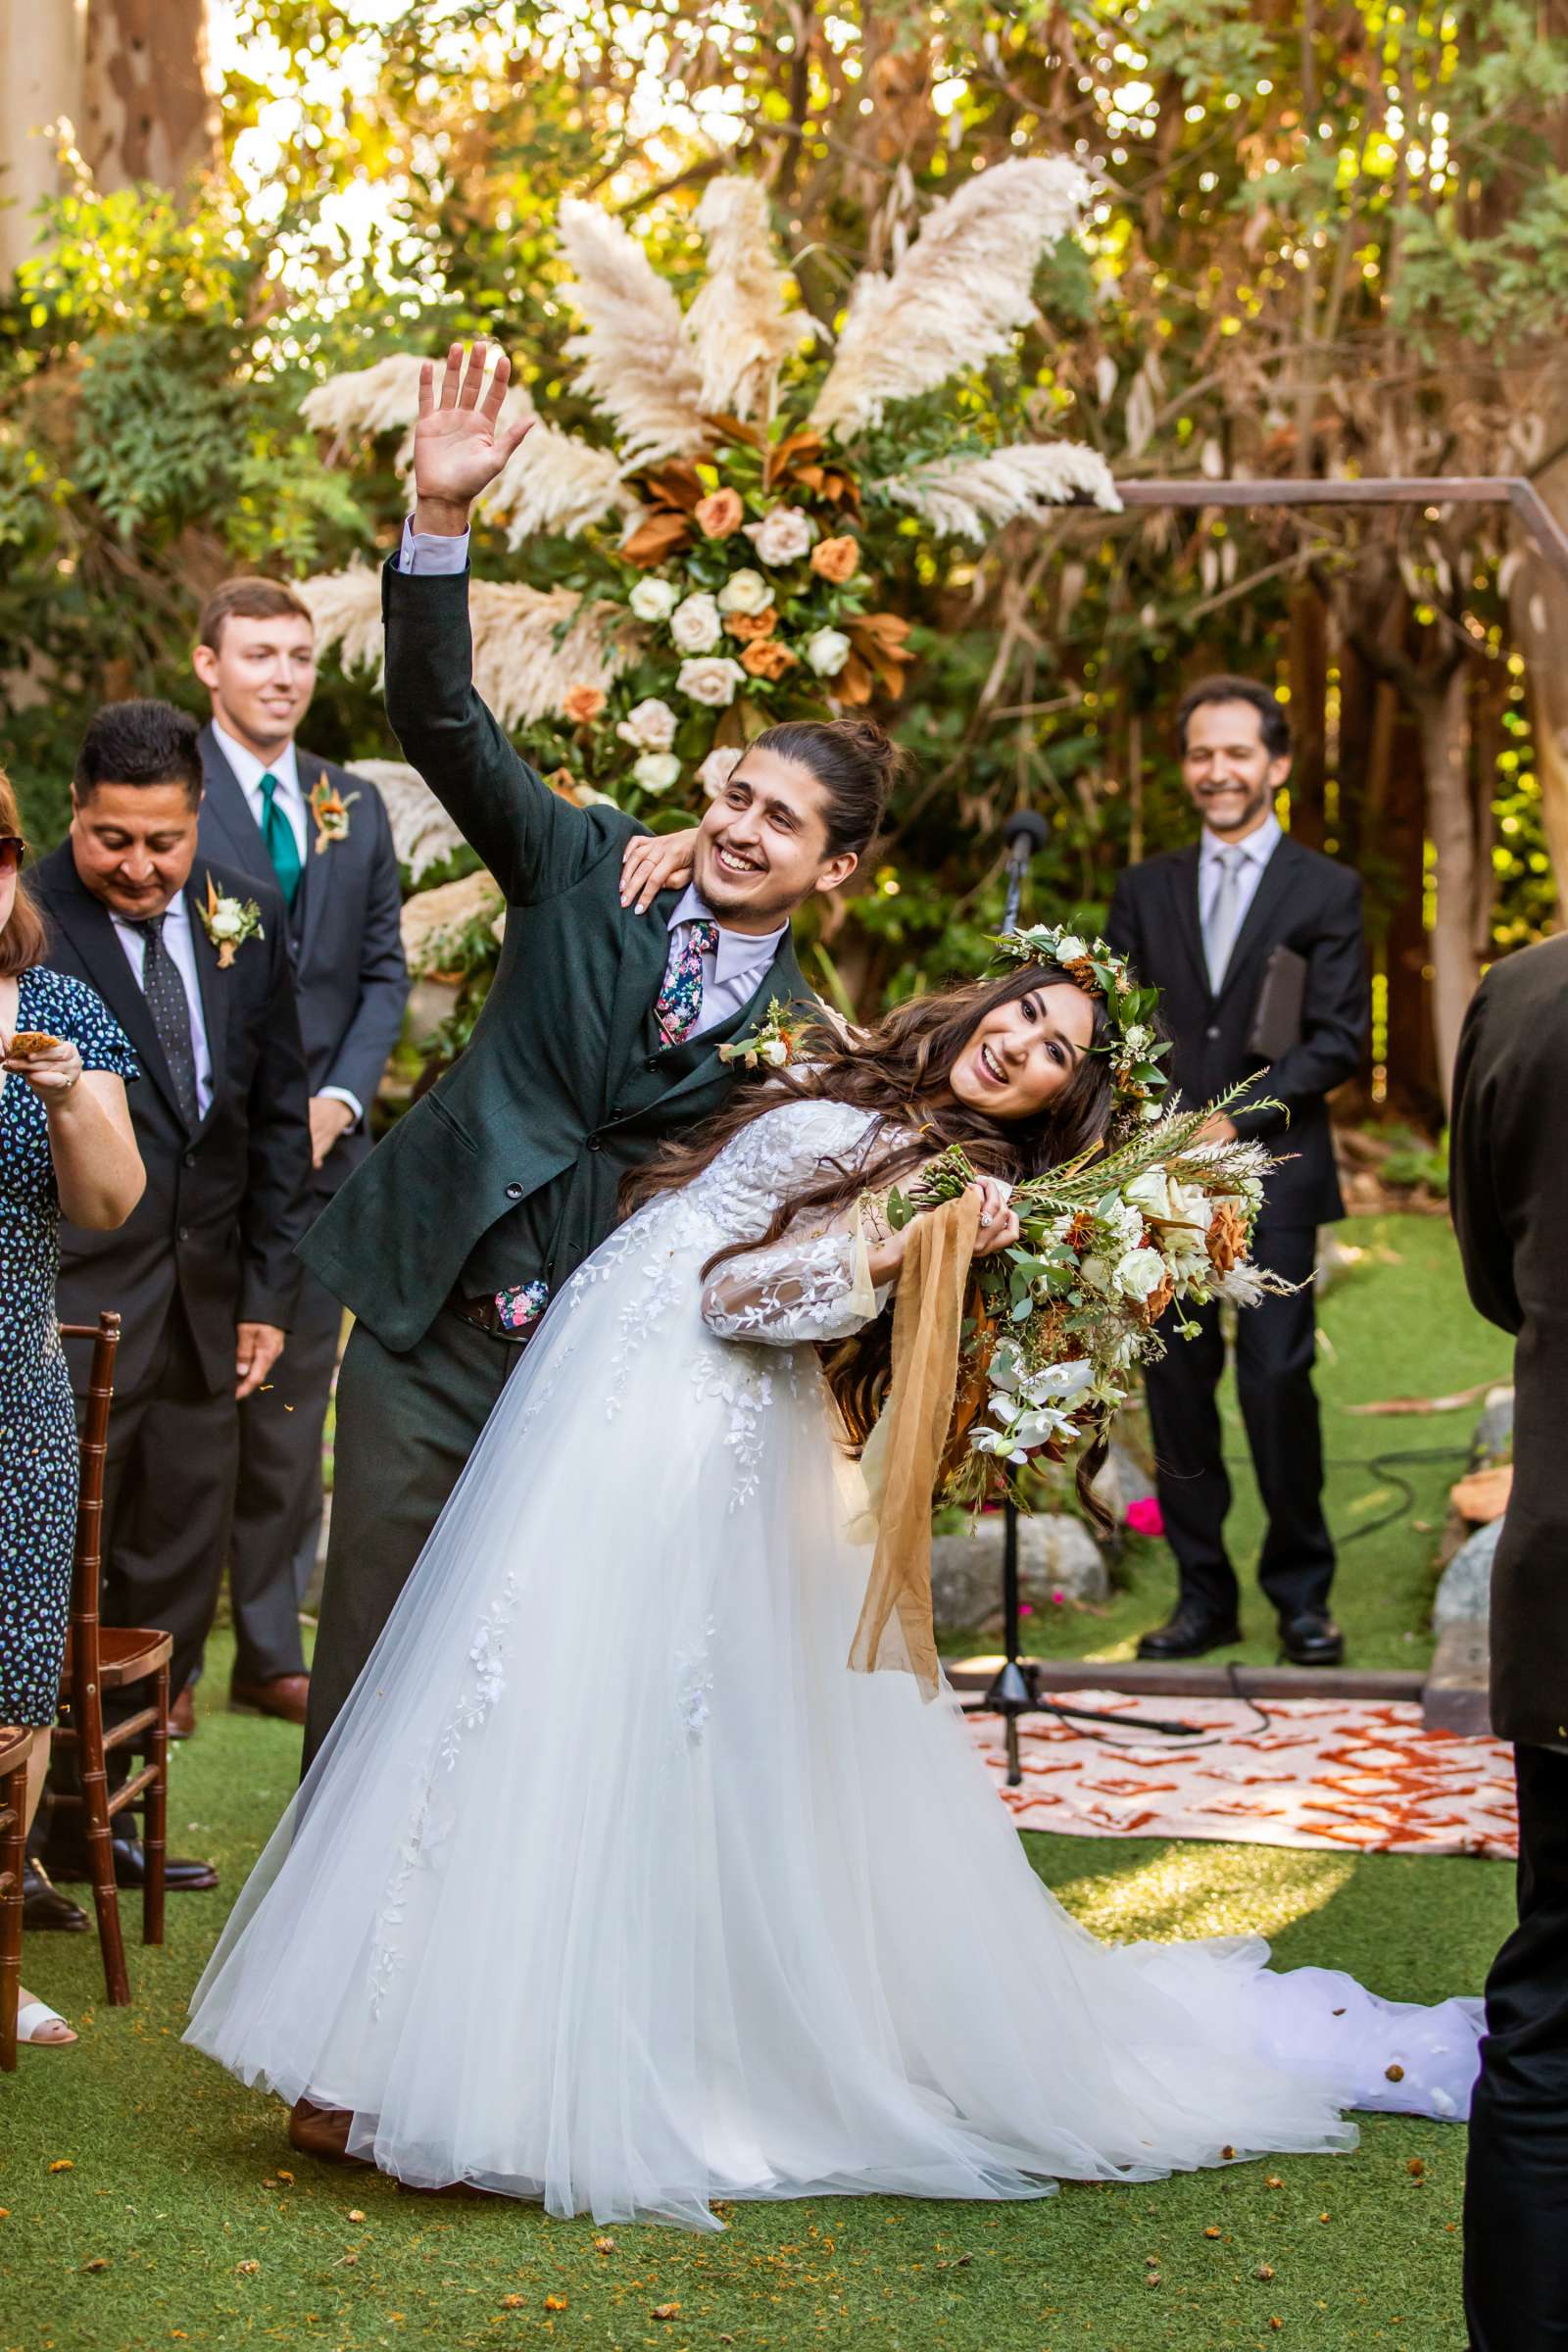 Twin Oaks House & Gardens Wedding Estate Wedding, Vanessa and Nicholas Wedding Photo #18 by True Photography